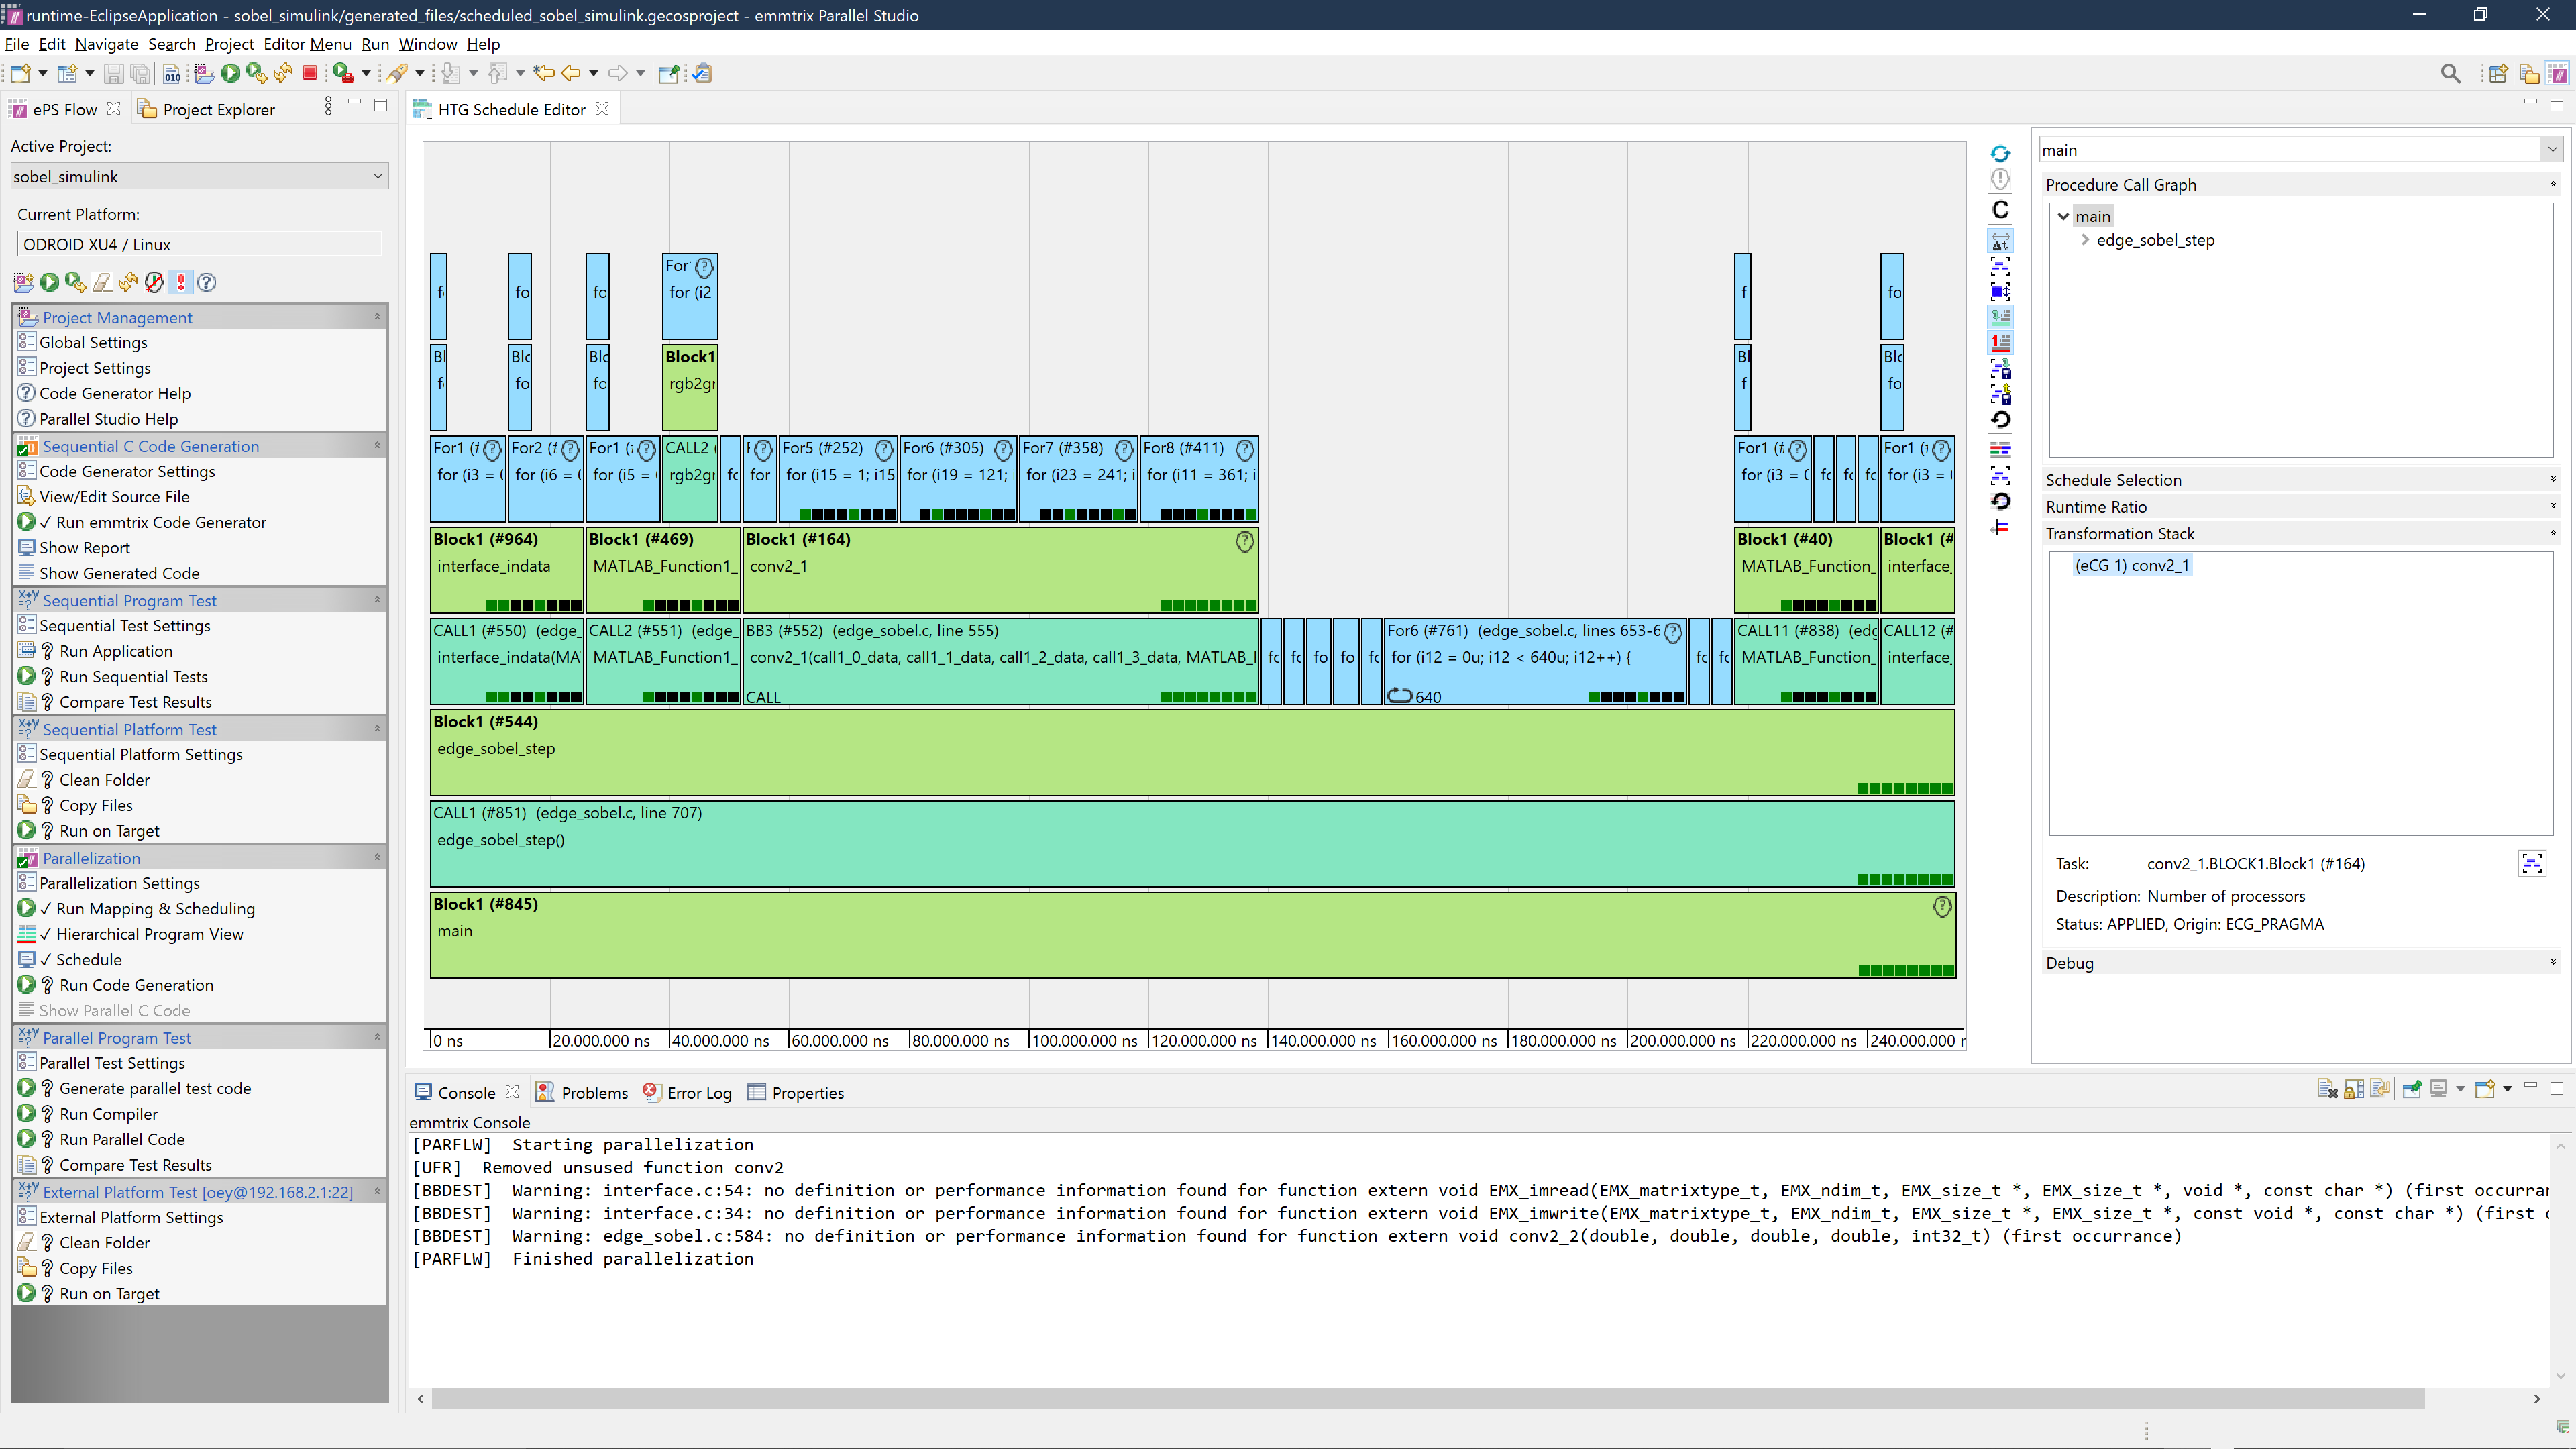 Hierachical program view screenshot